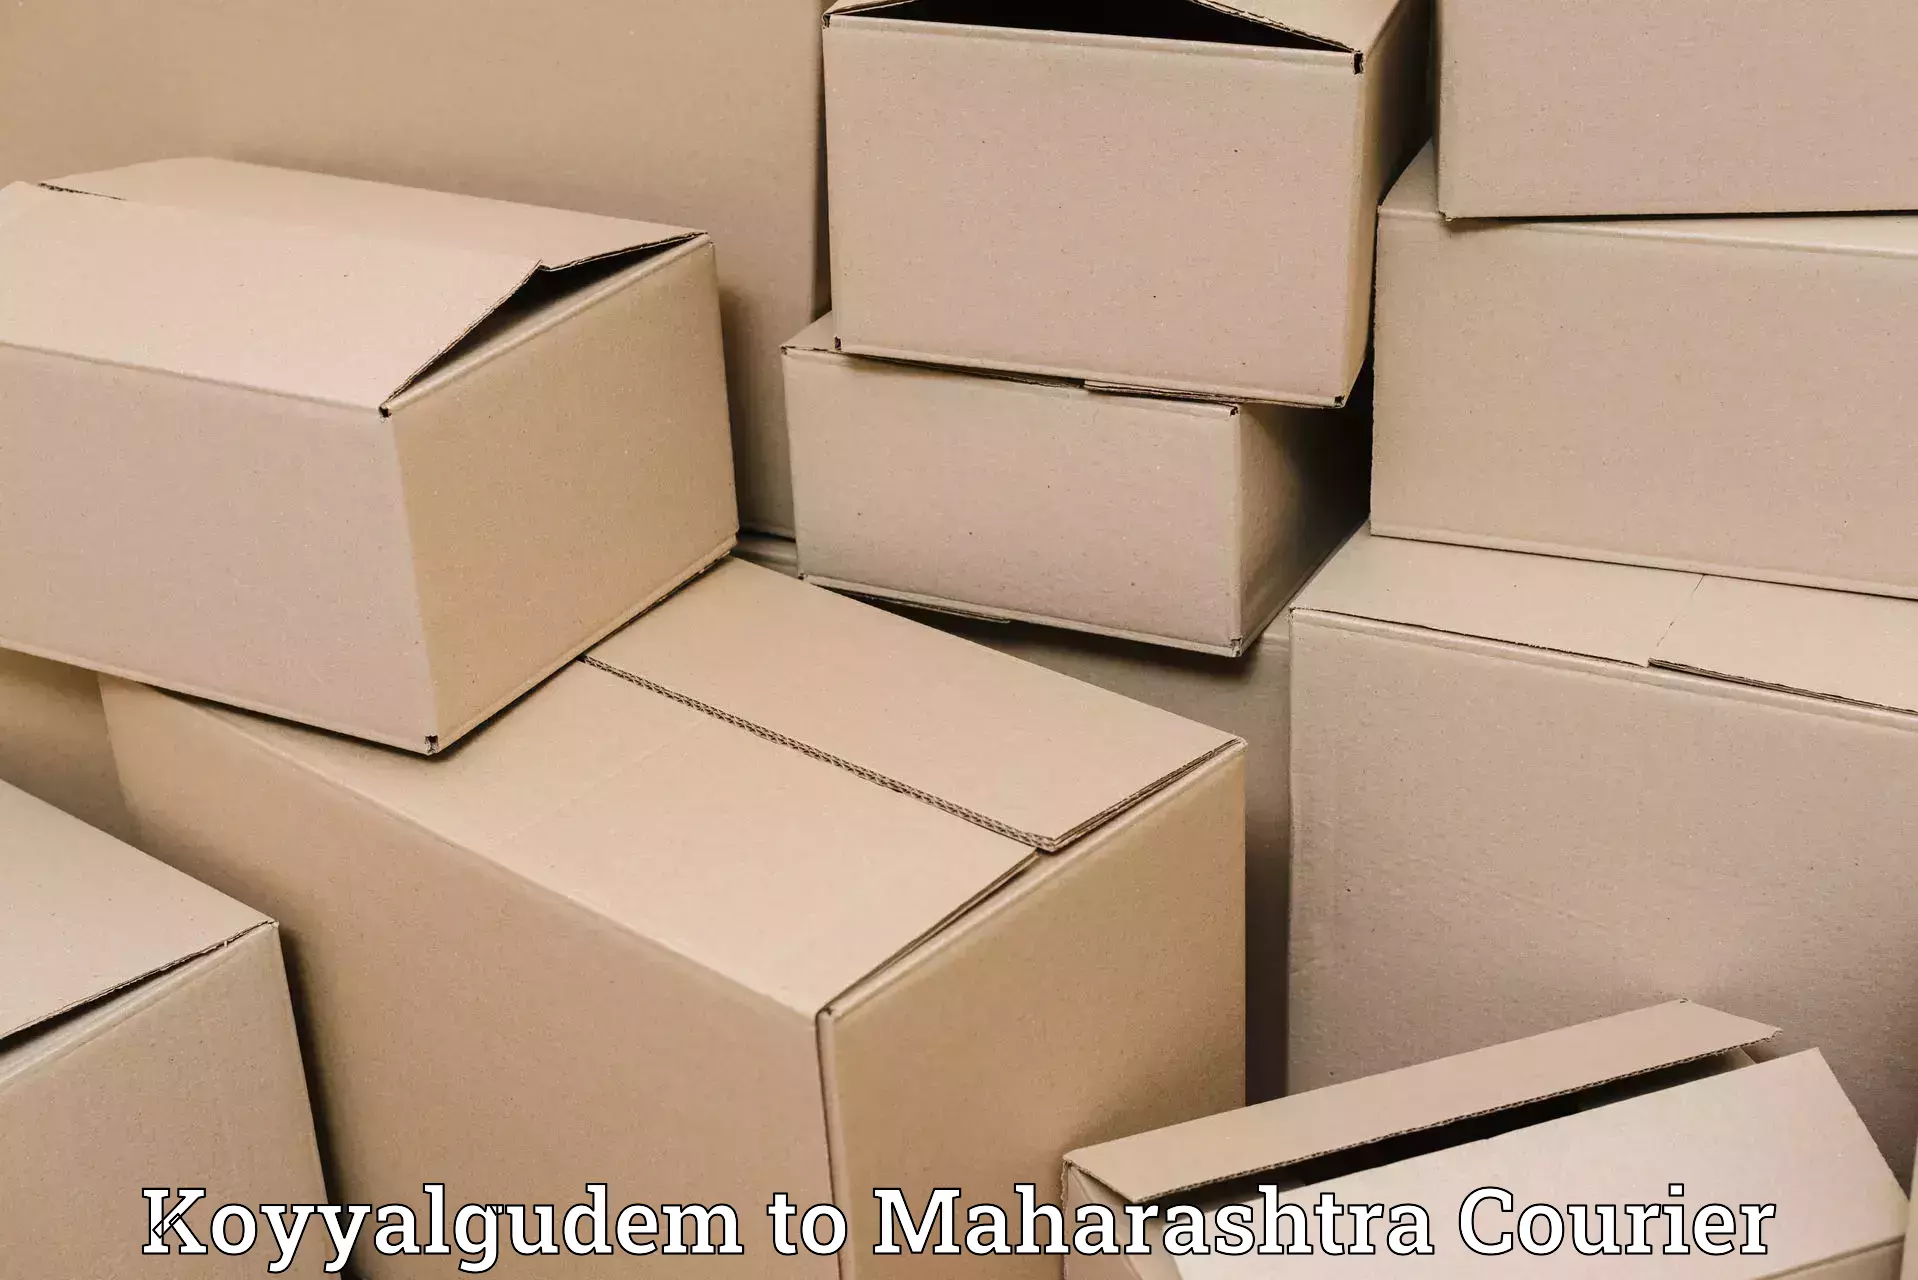 Customer-focused courier Koyyalgudem to Tata Institute of Social Sciences Mumbai